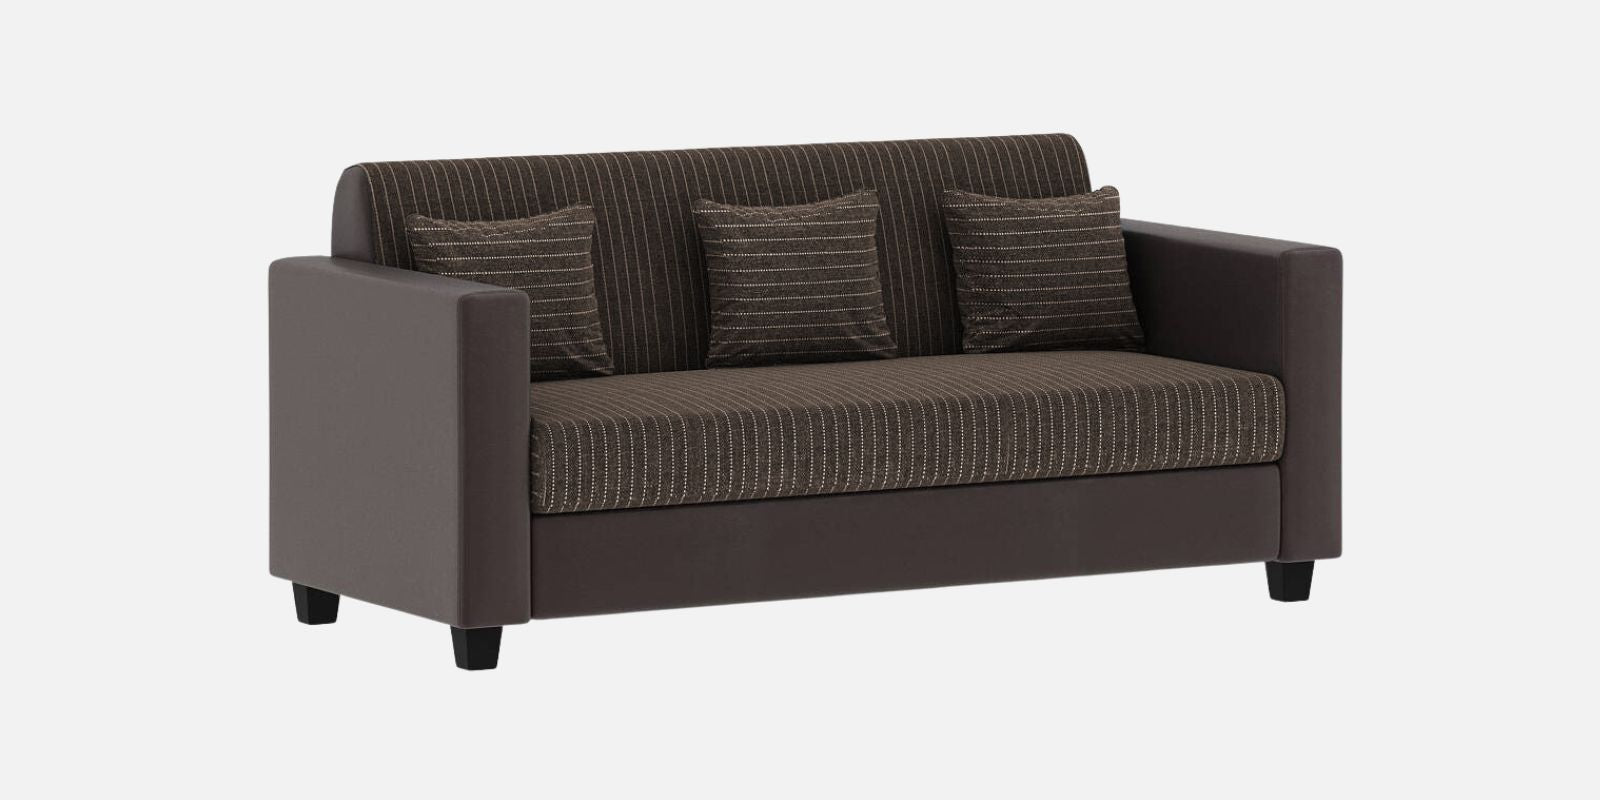 Baley Fabric 3 Seater Sofa in Lama Brown Colour